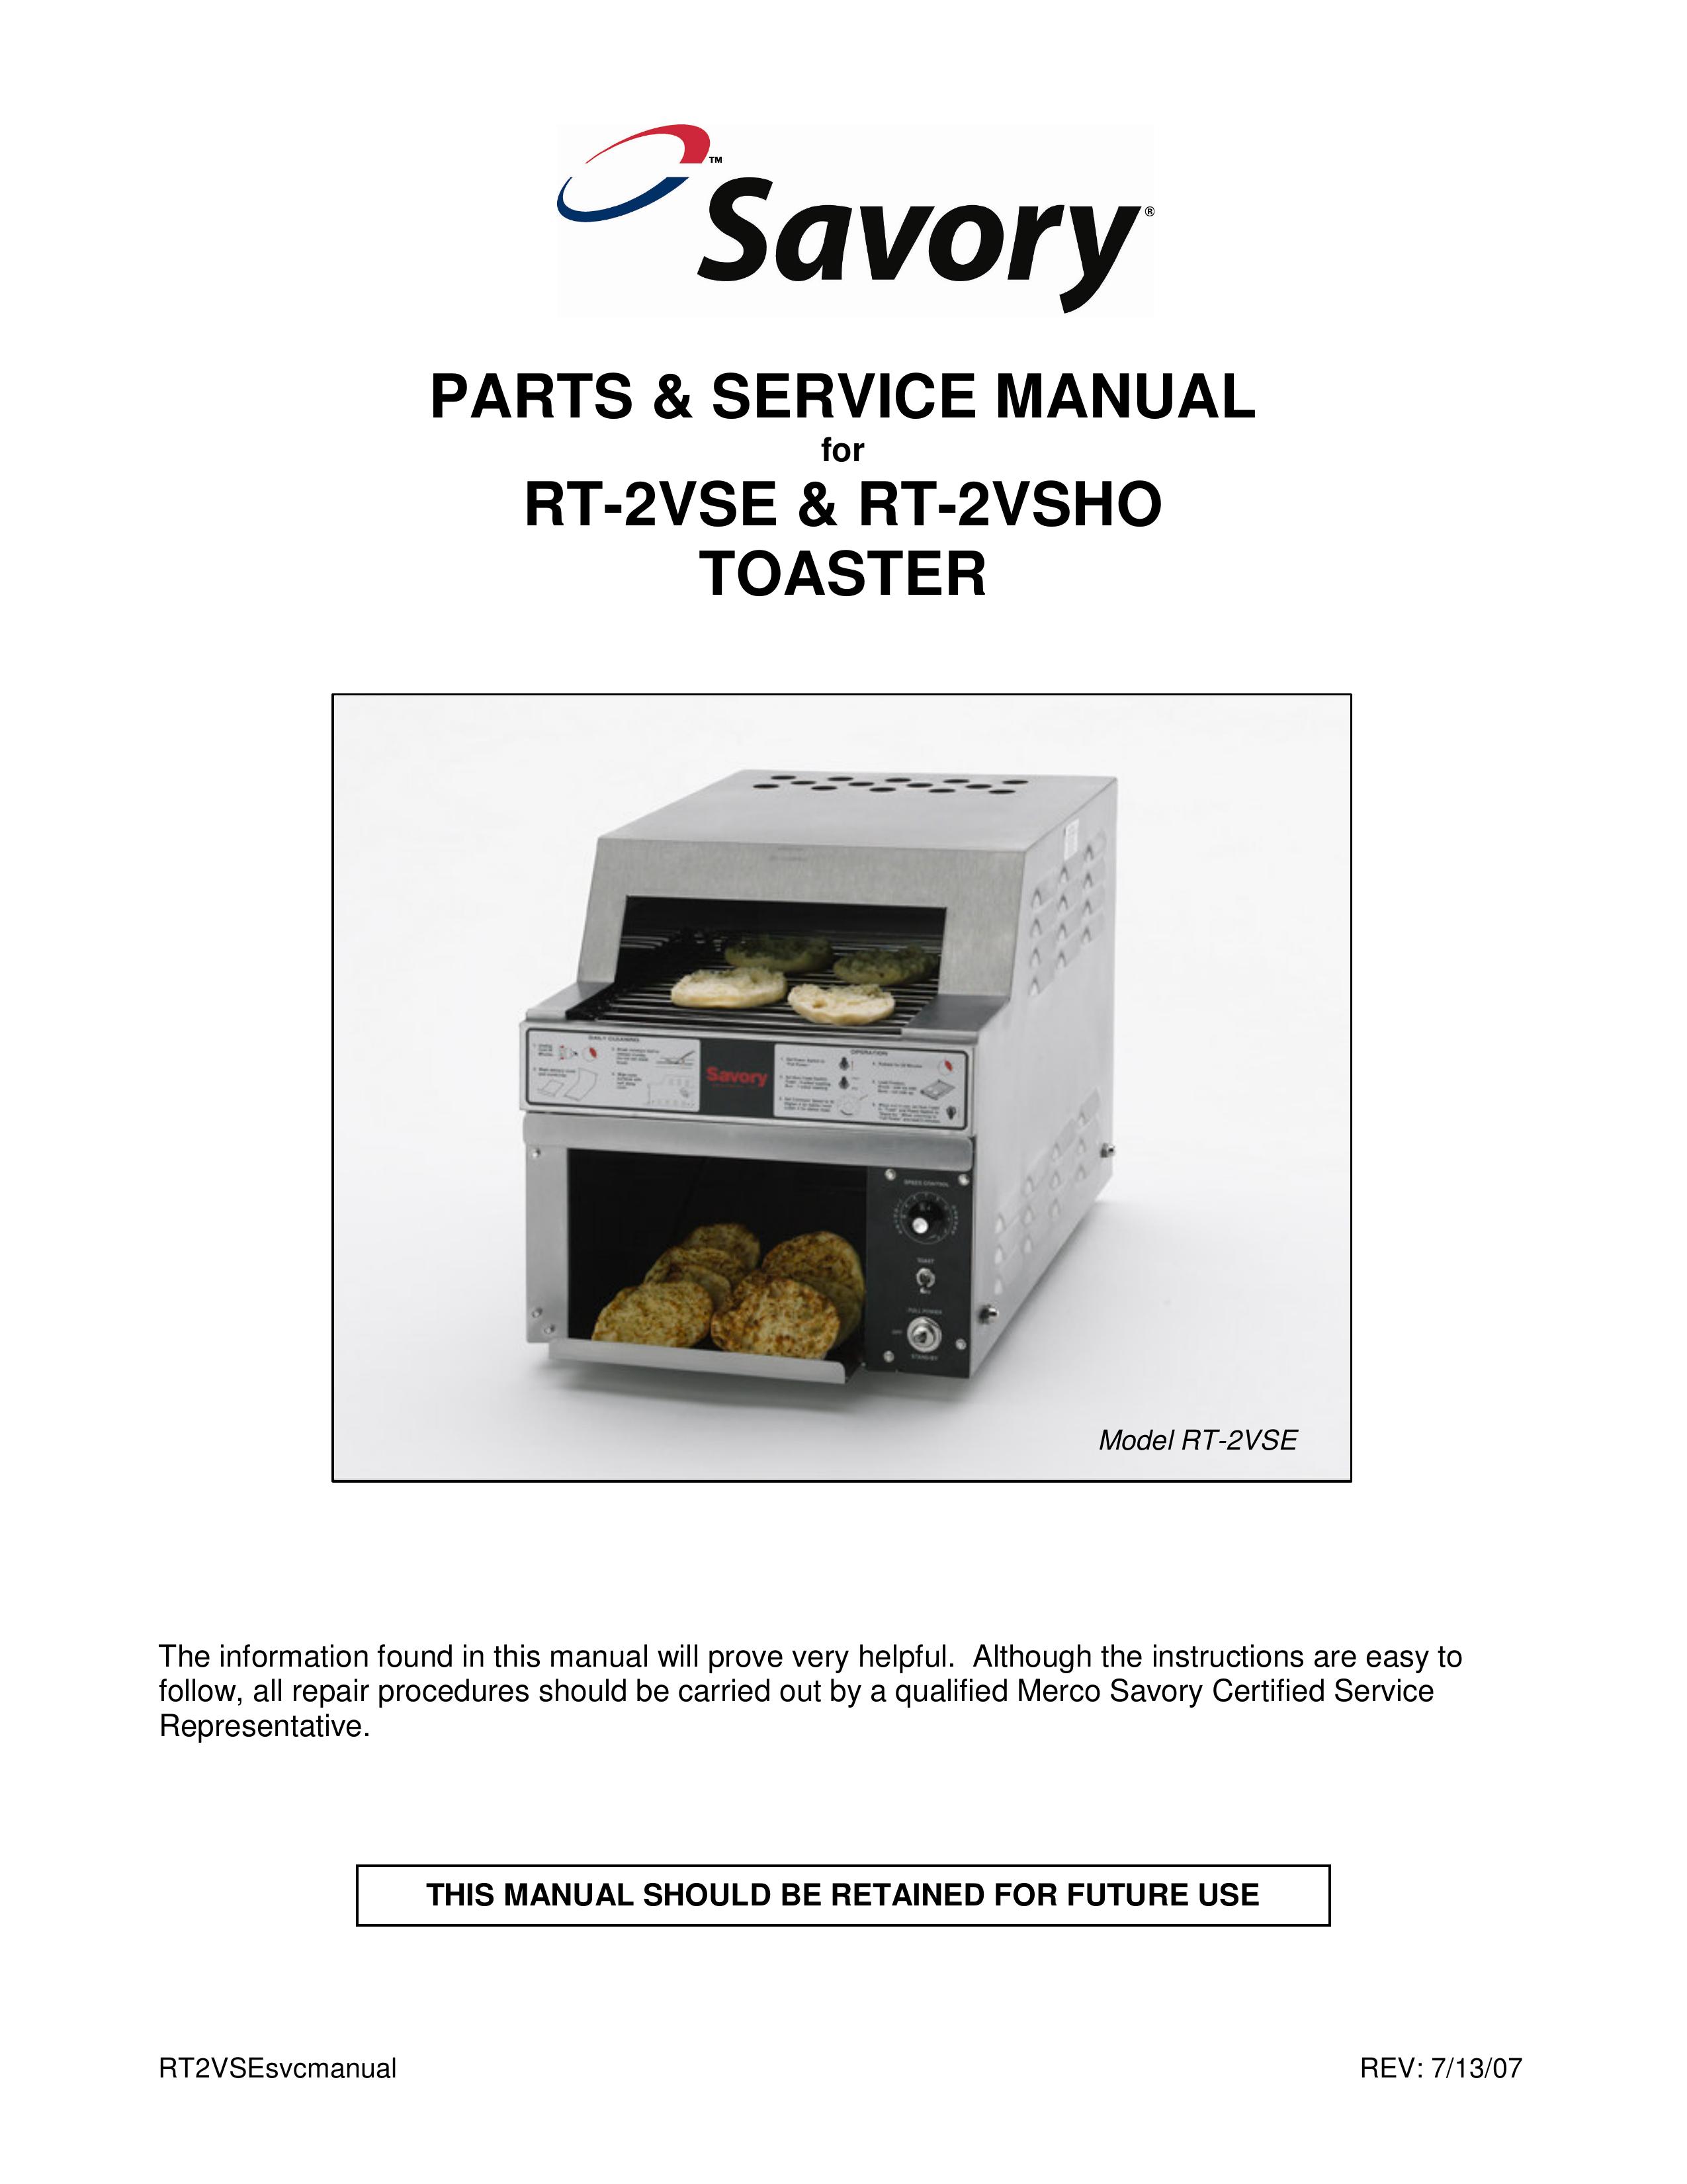 Merco Savory RT-2VSE Toaster User Manual